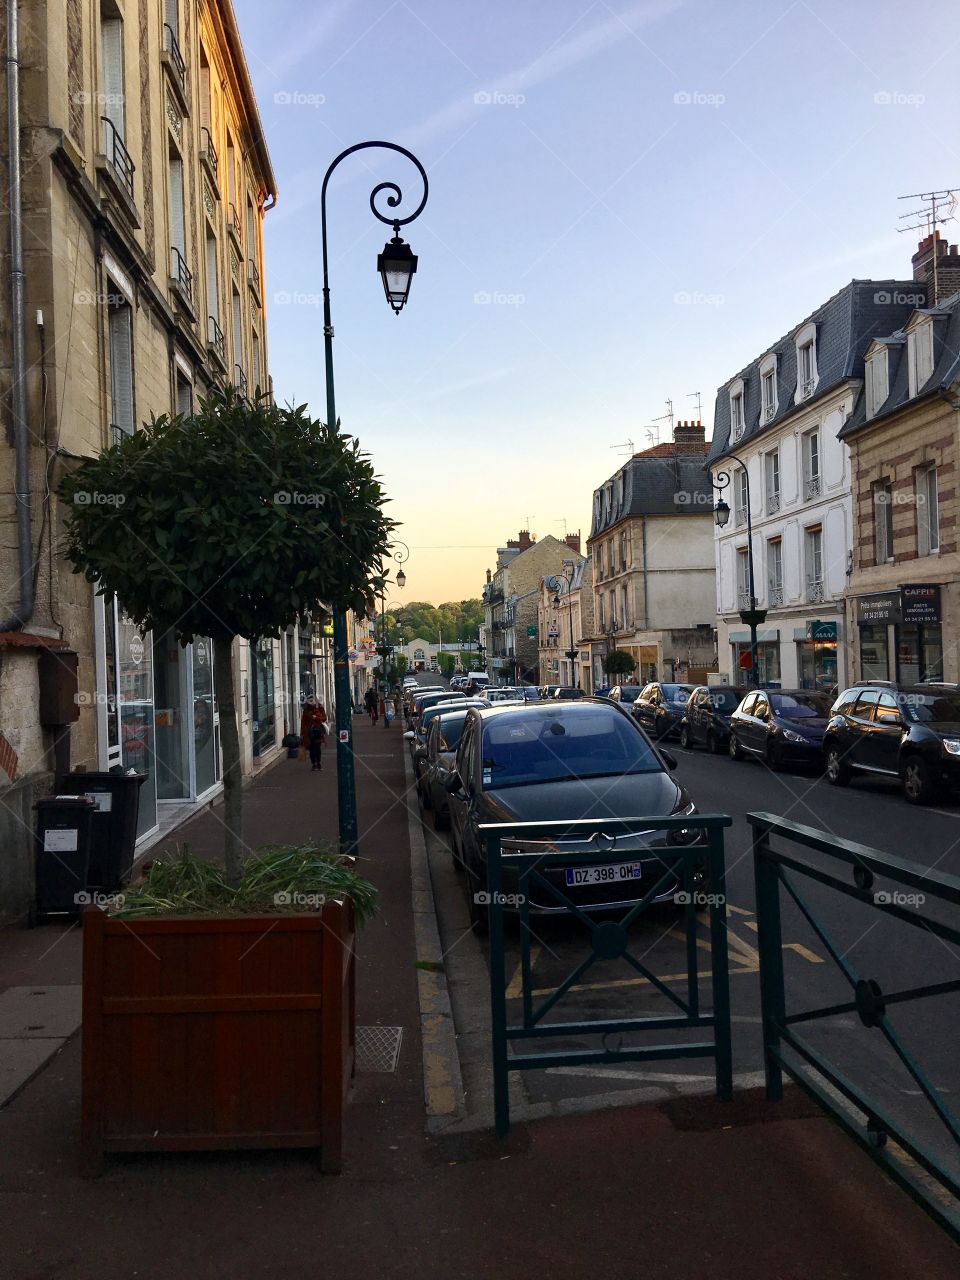 Pontoise city 8 :00 pm France 